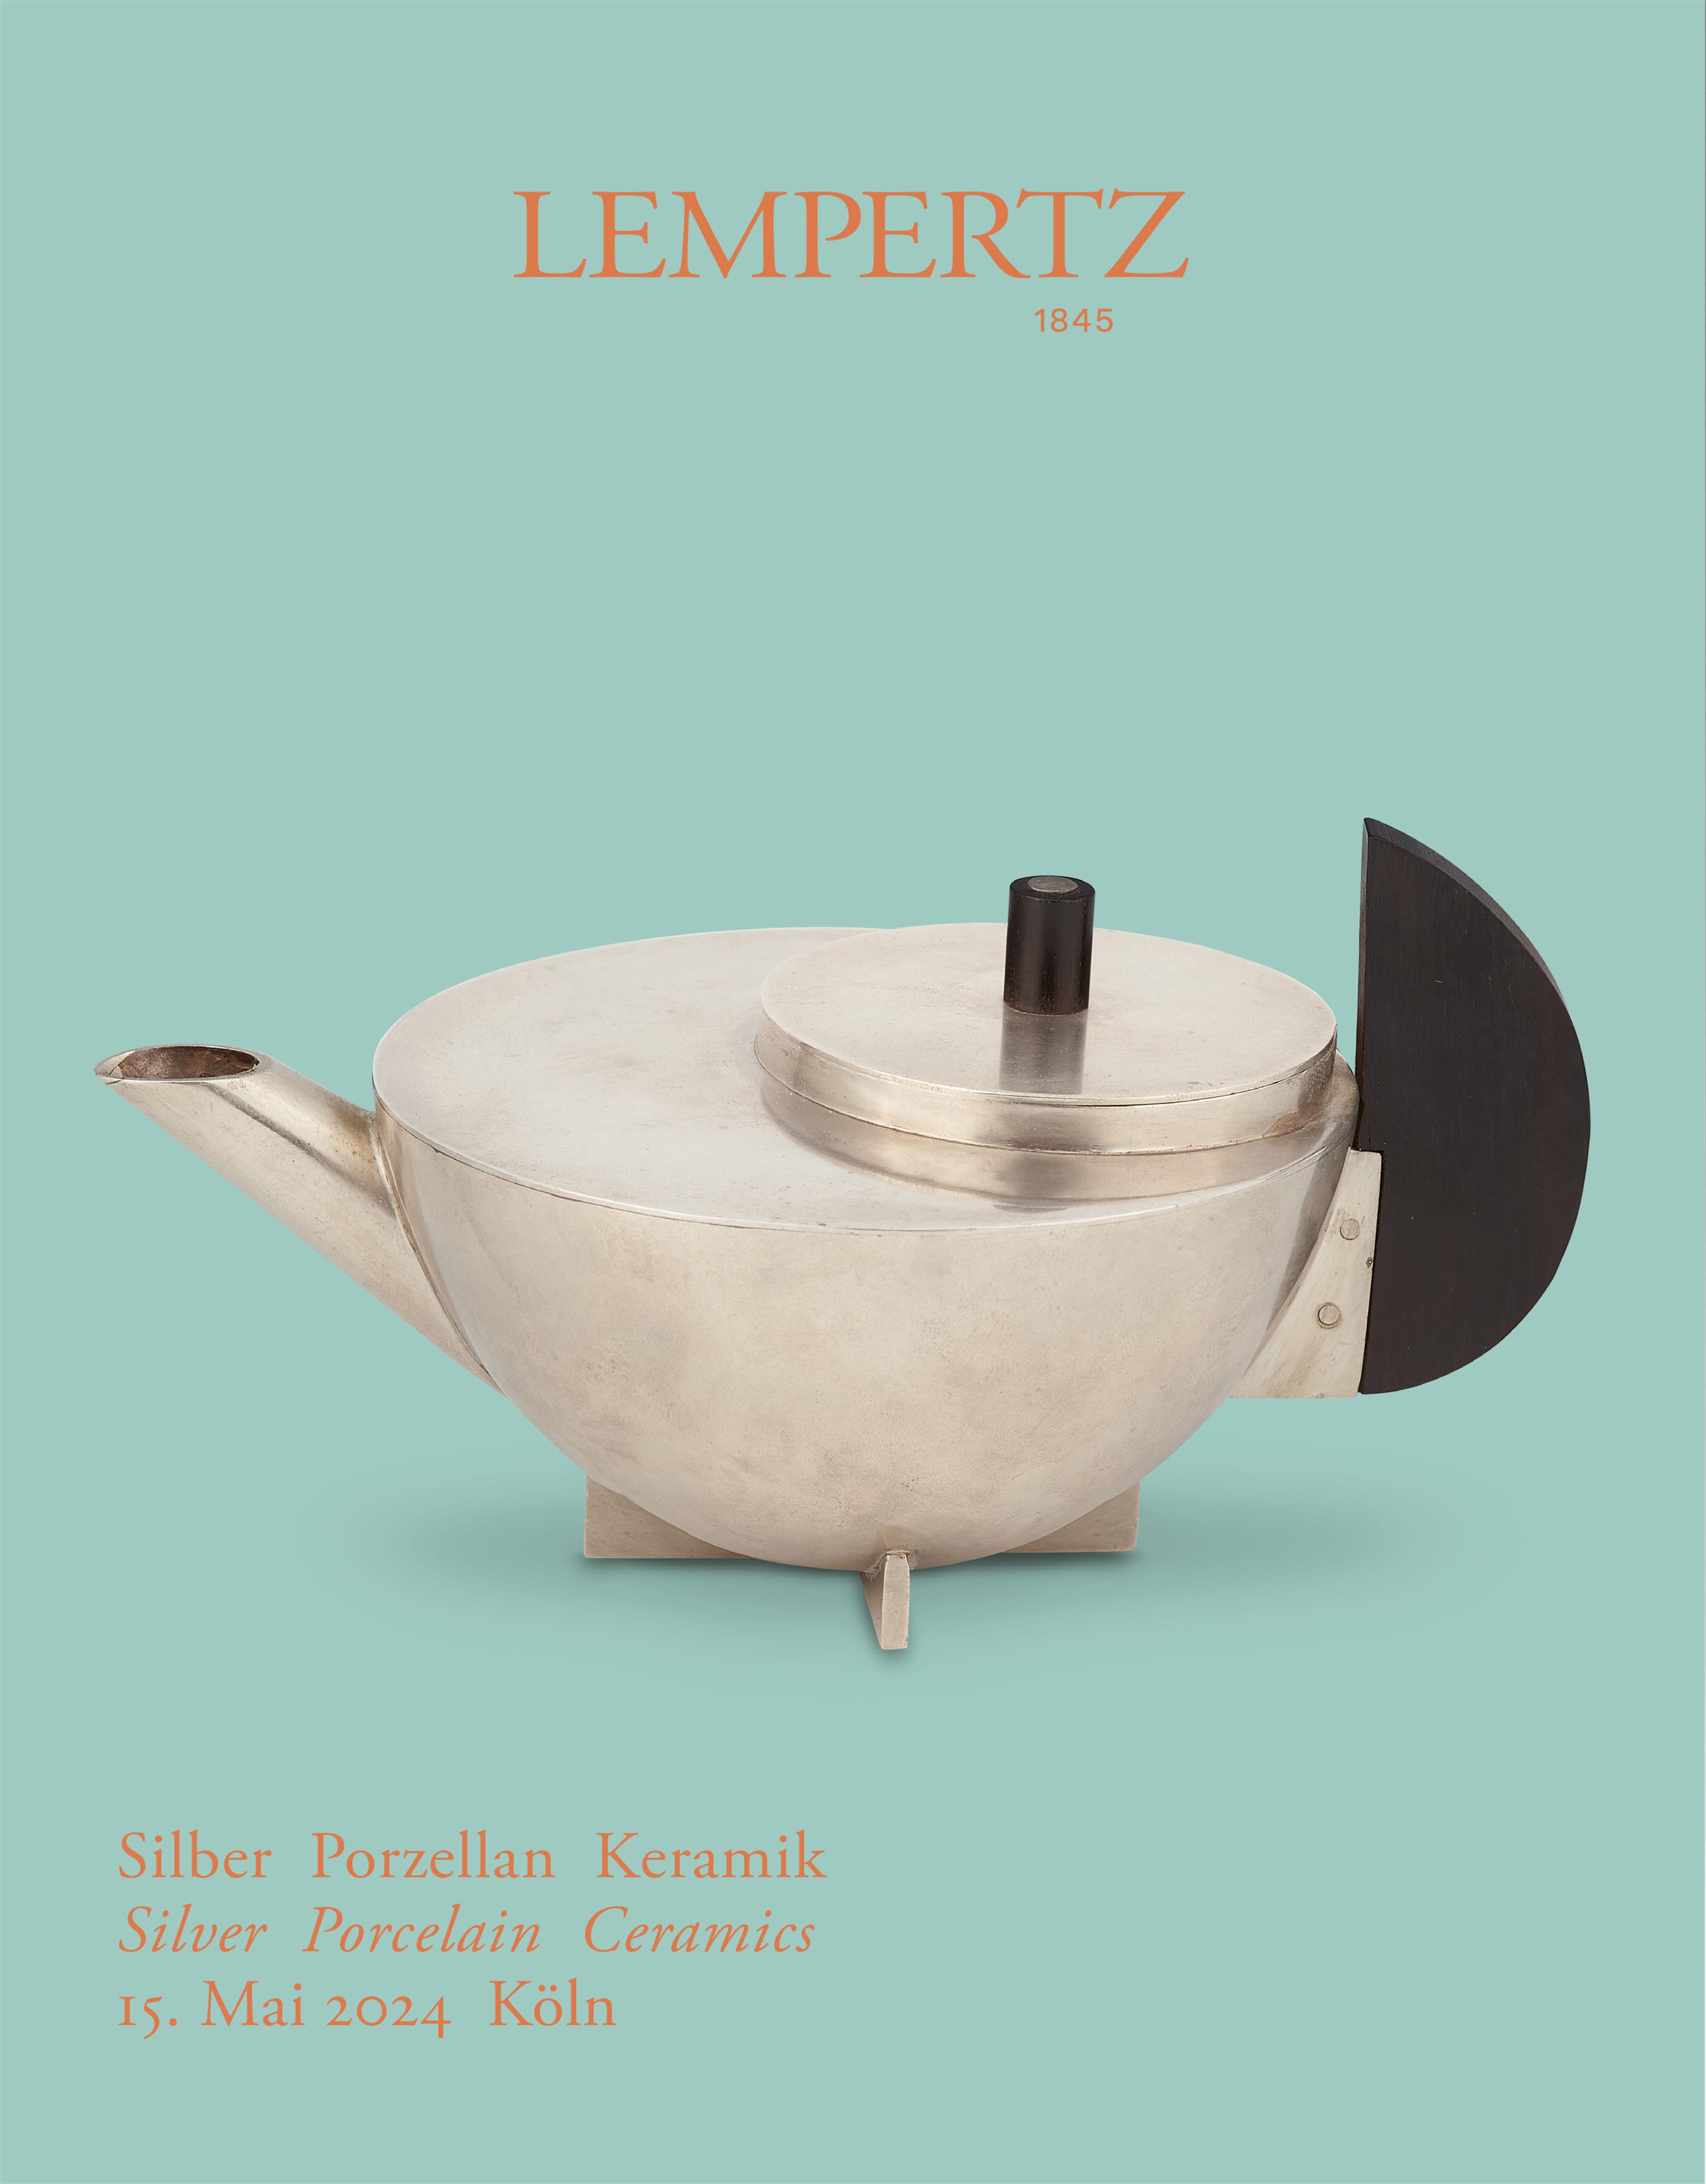 Auktionshaus - Silber Porzellan Keramik - Auktionskatalog 1244 – Auktionshaus Lempertz